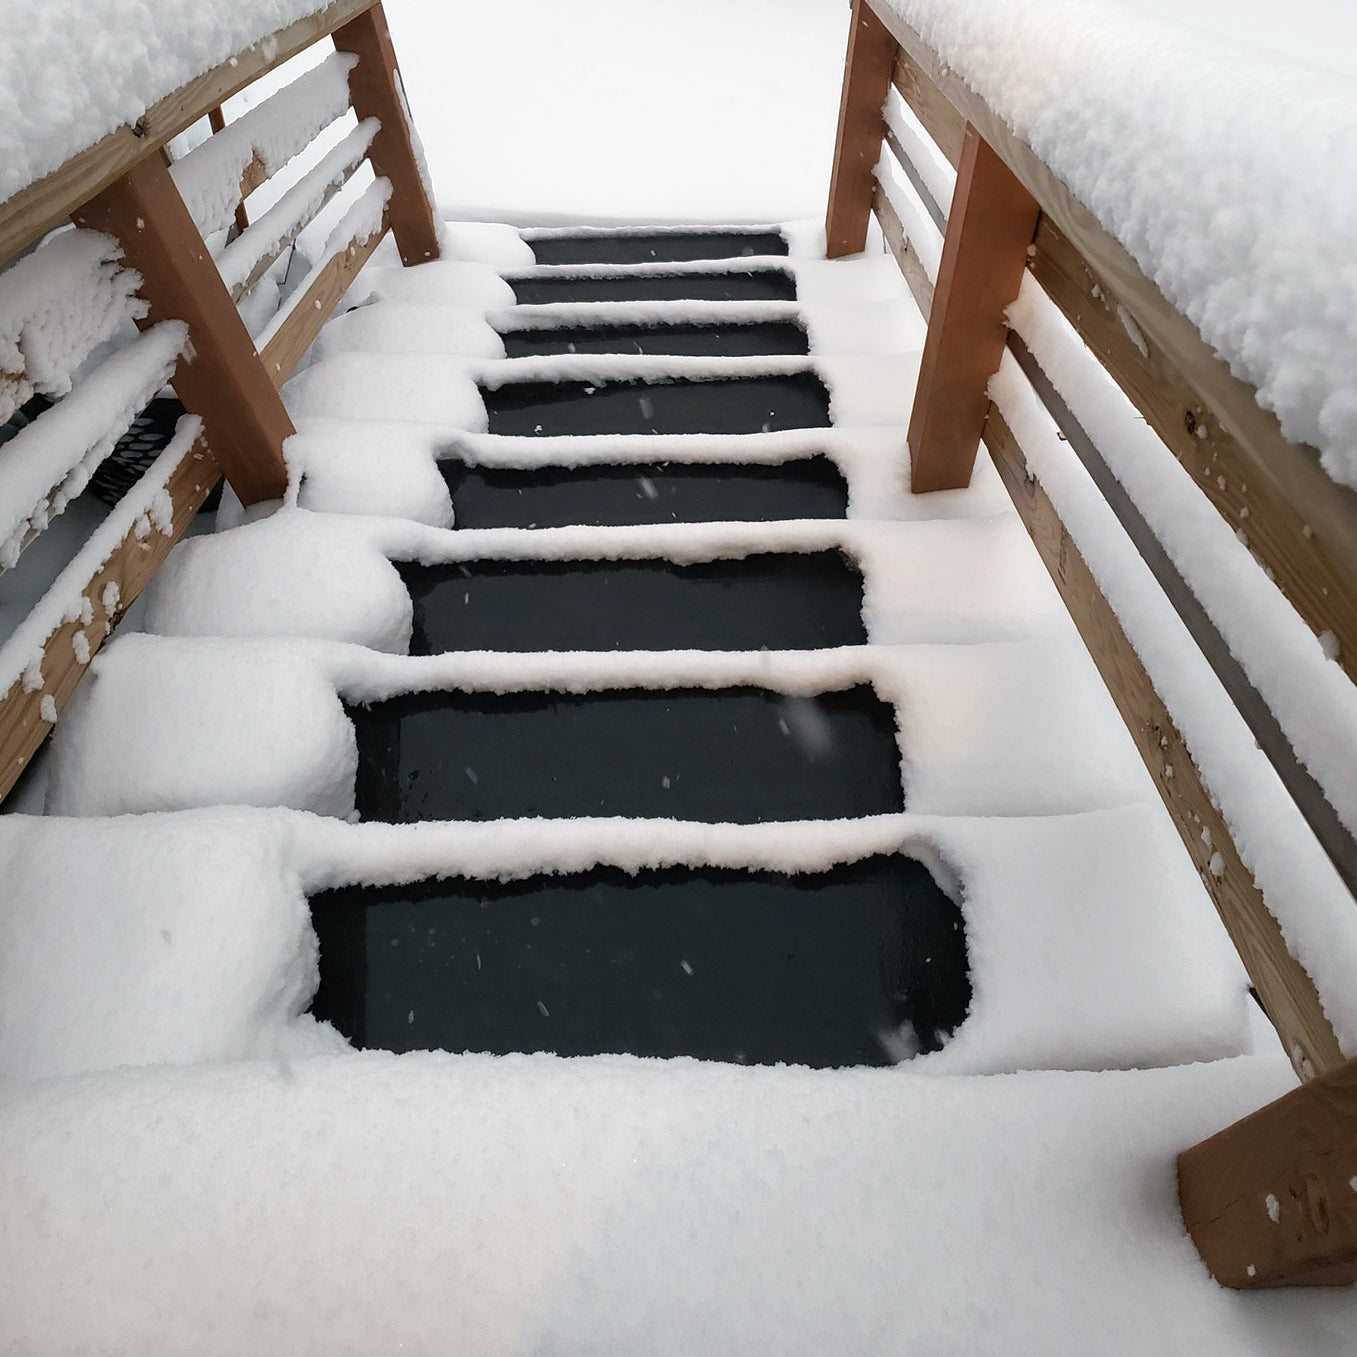 HeatTrak Heated Snow Melting Half Walkway Mat | Outdoor 'No Slip' Heated Walkway Mat 30